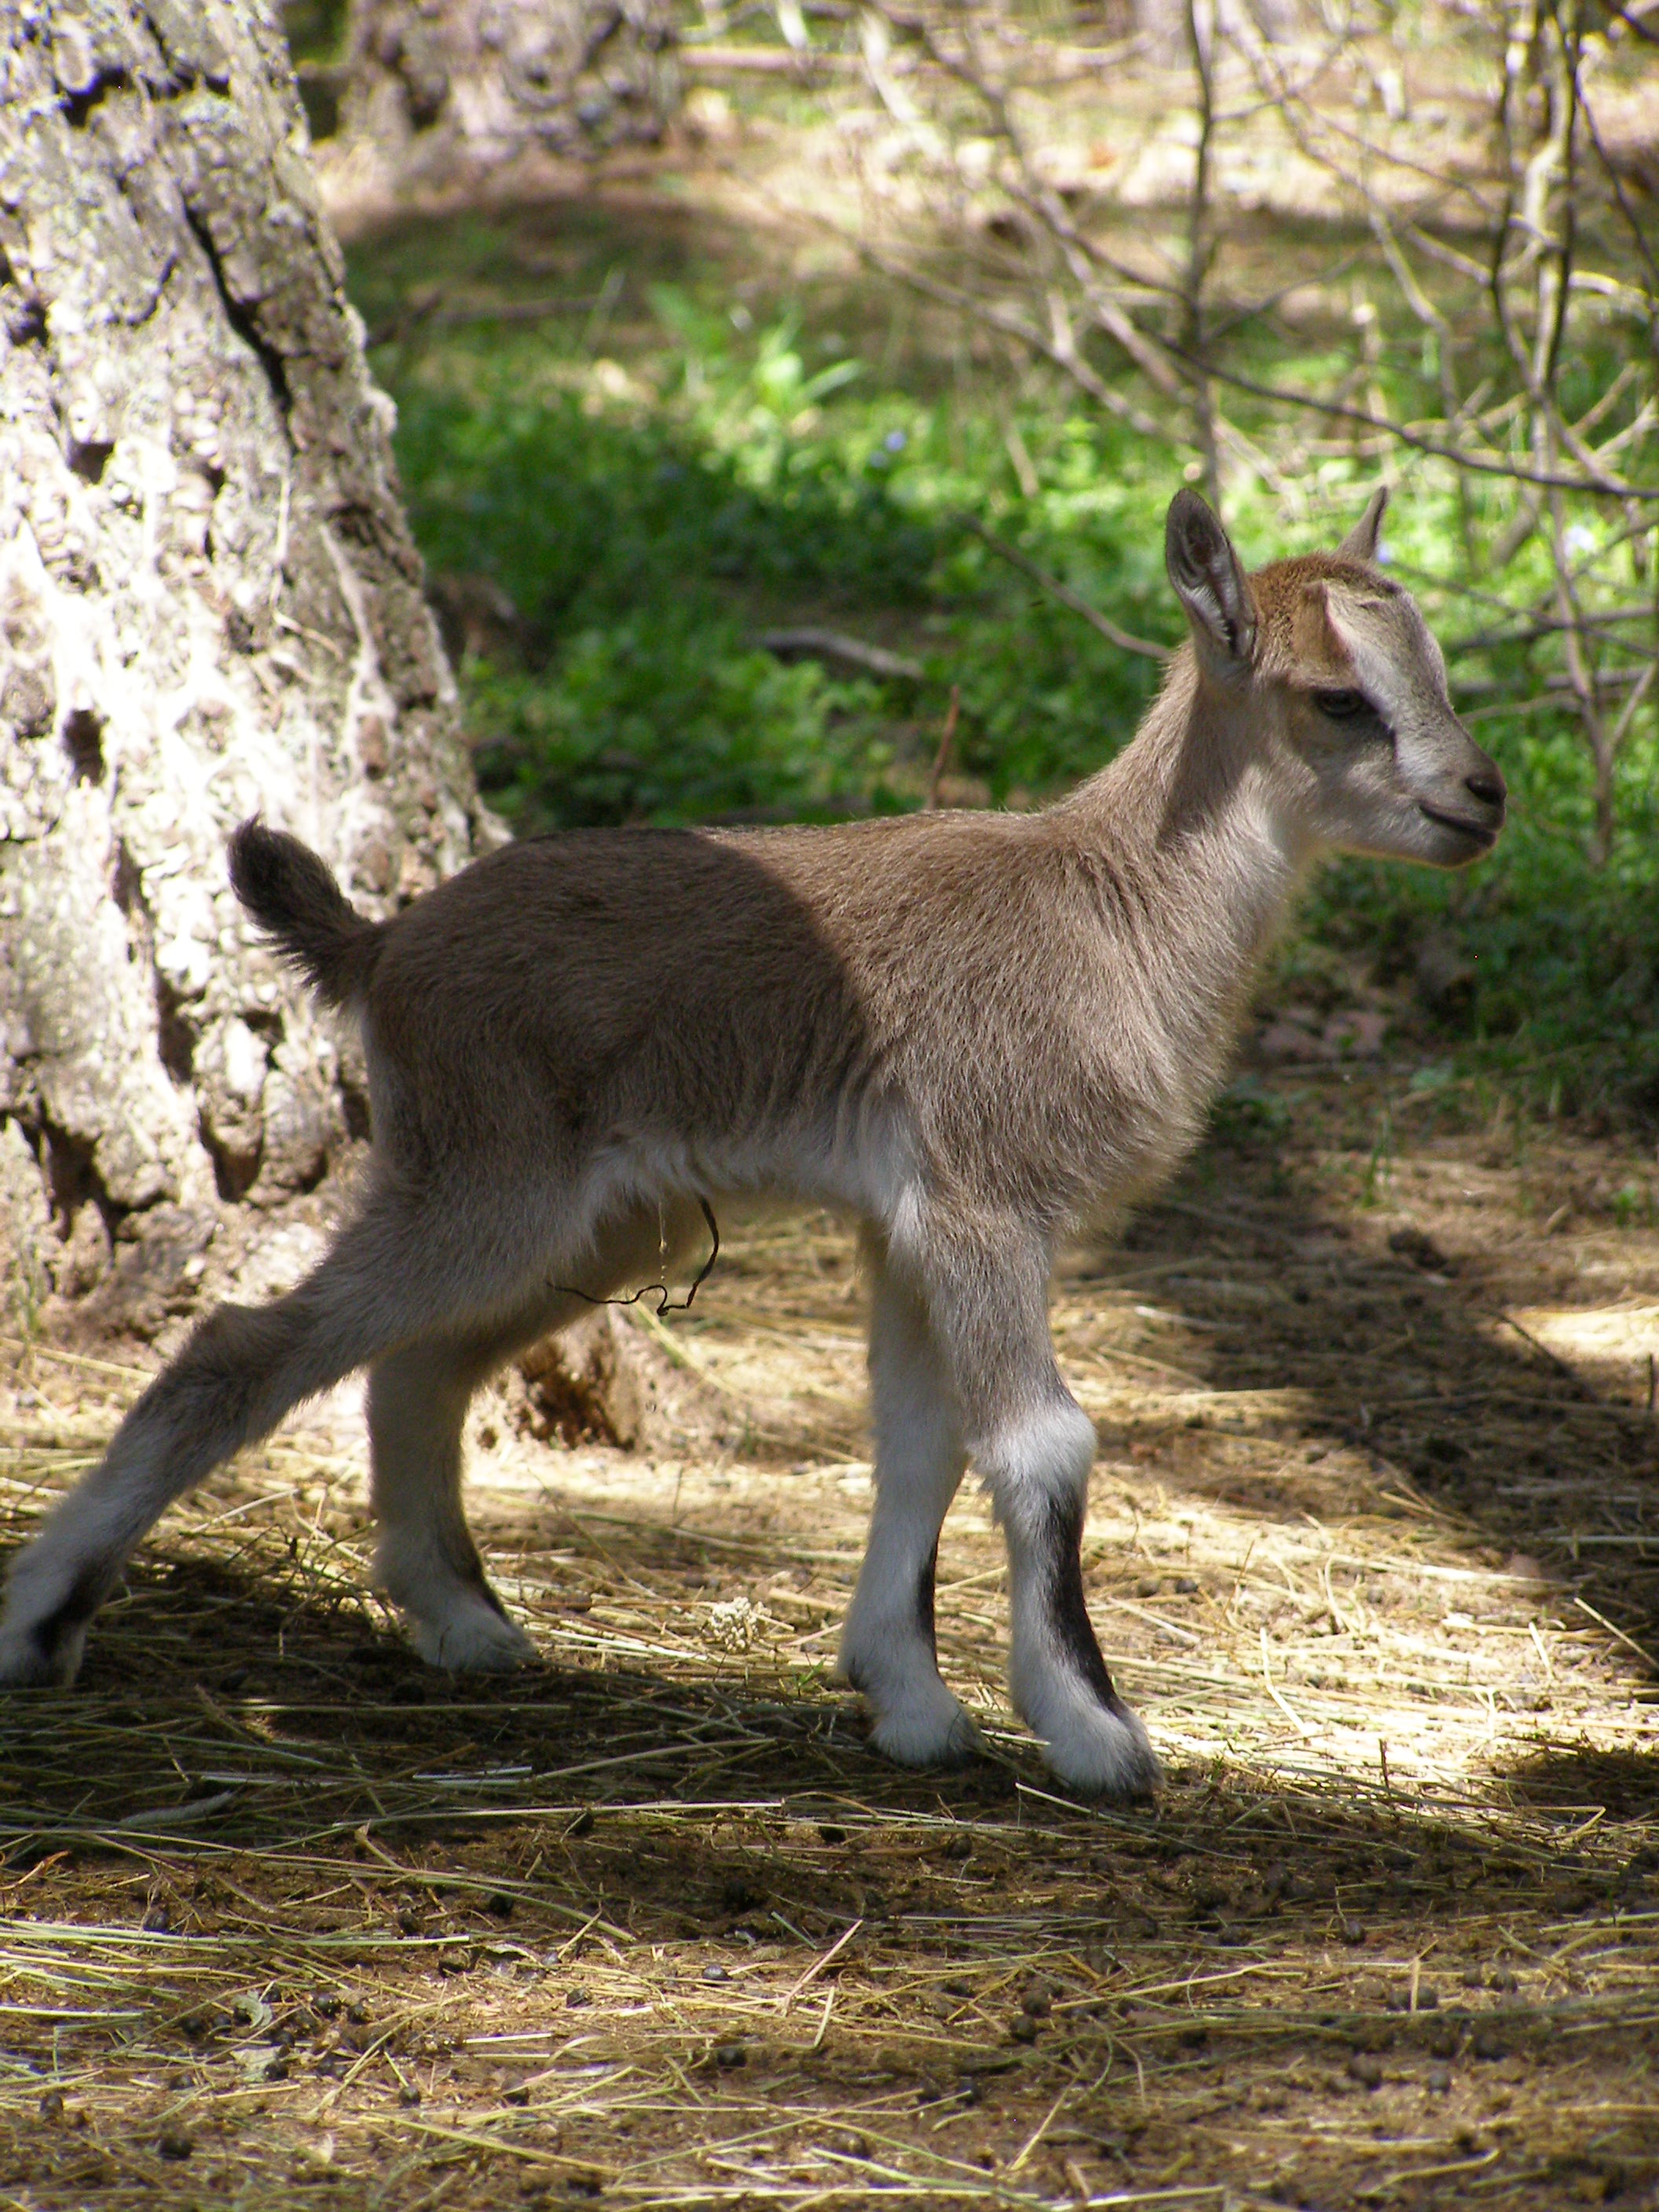 Wild goat - Wikipedia